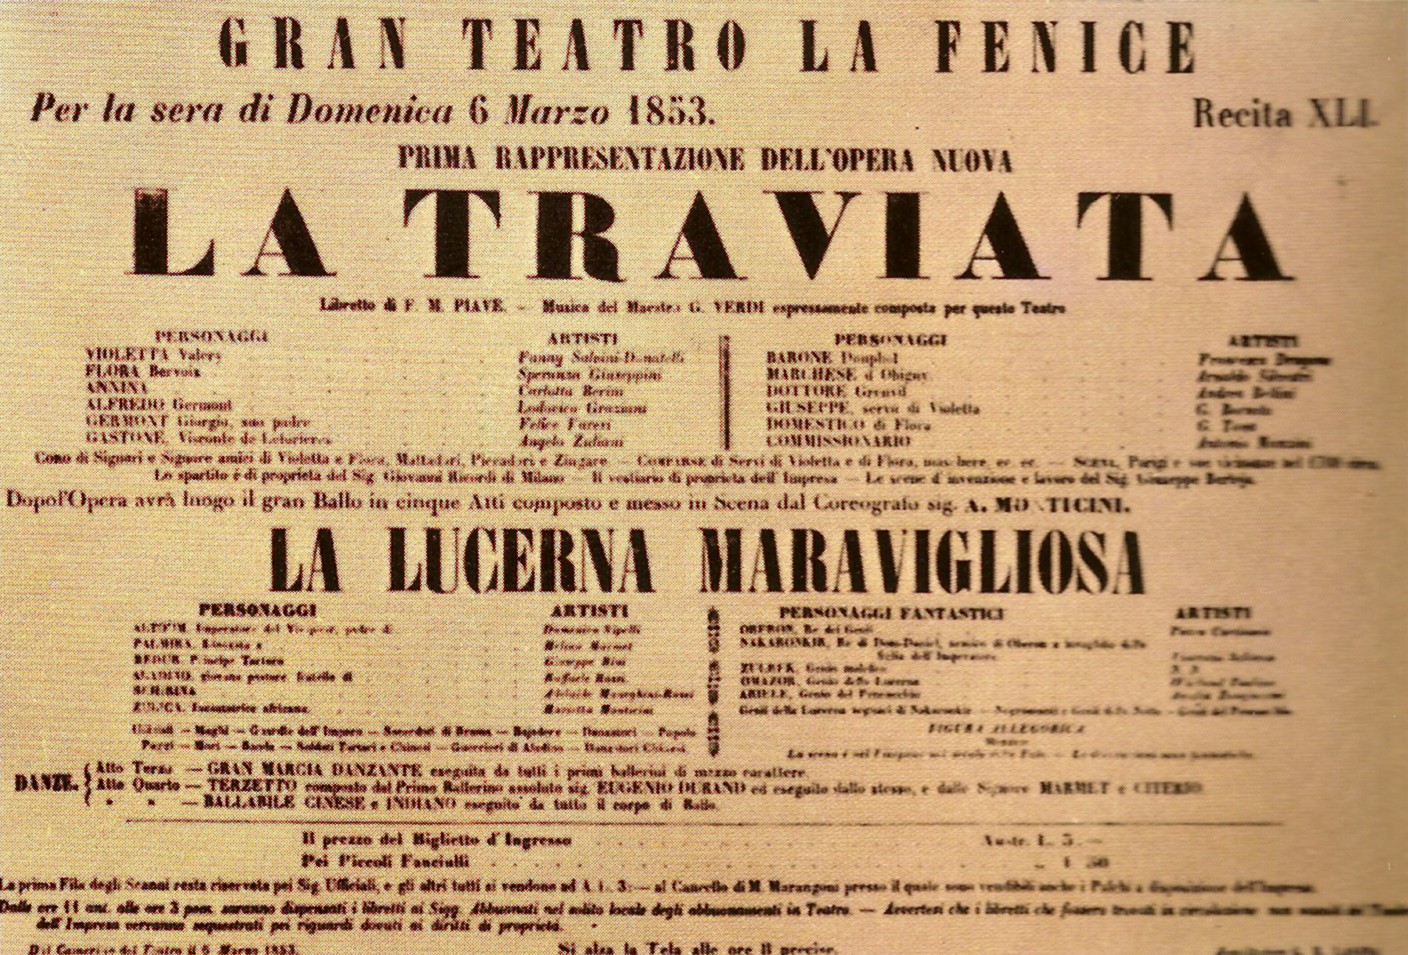 Verdi's La Traviata: an opera that shook up the codes 6